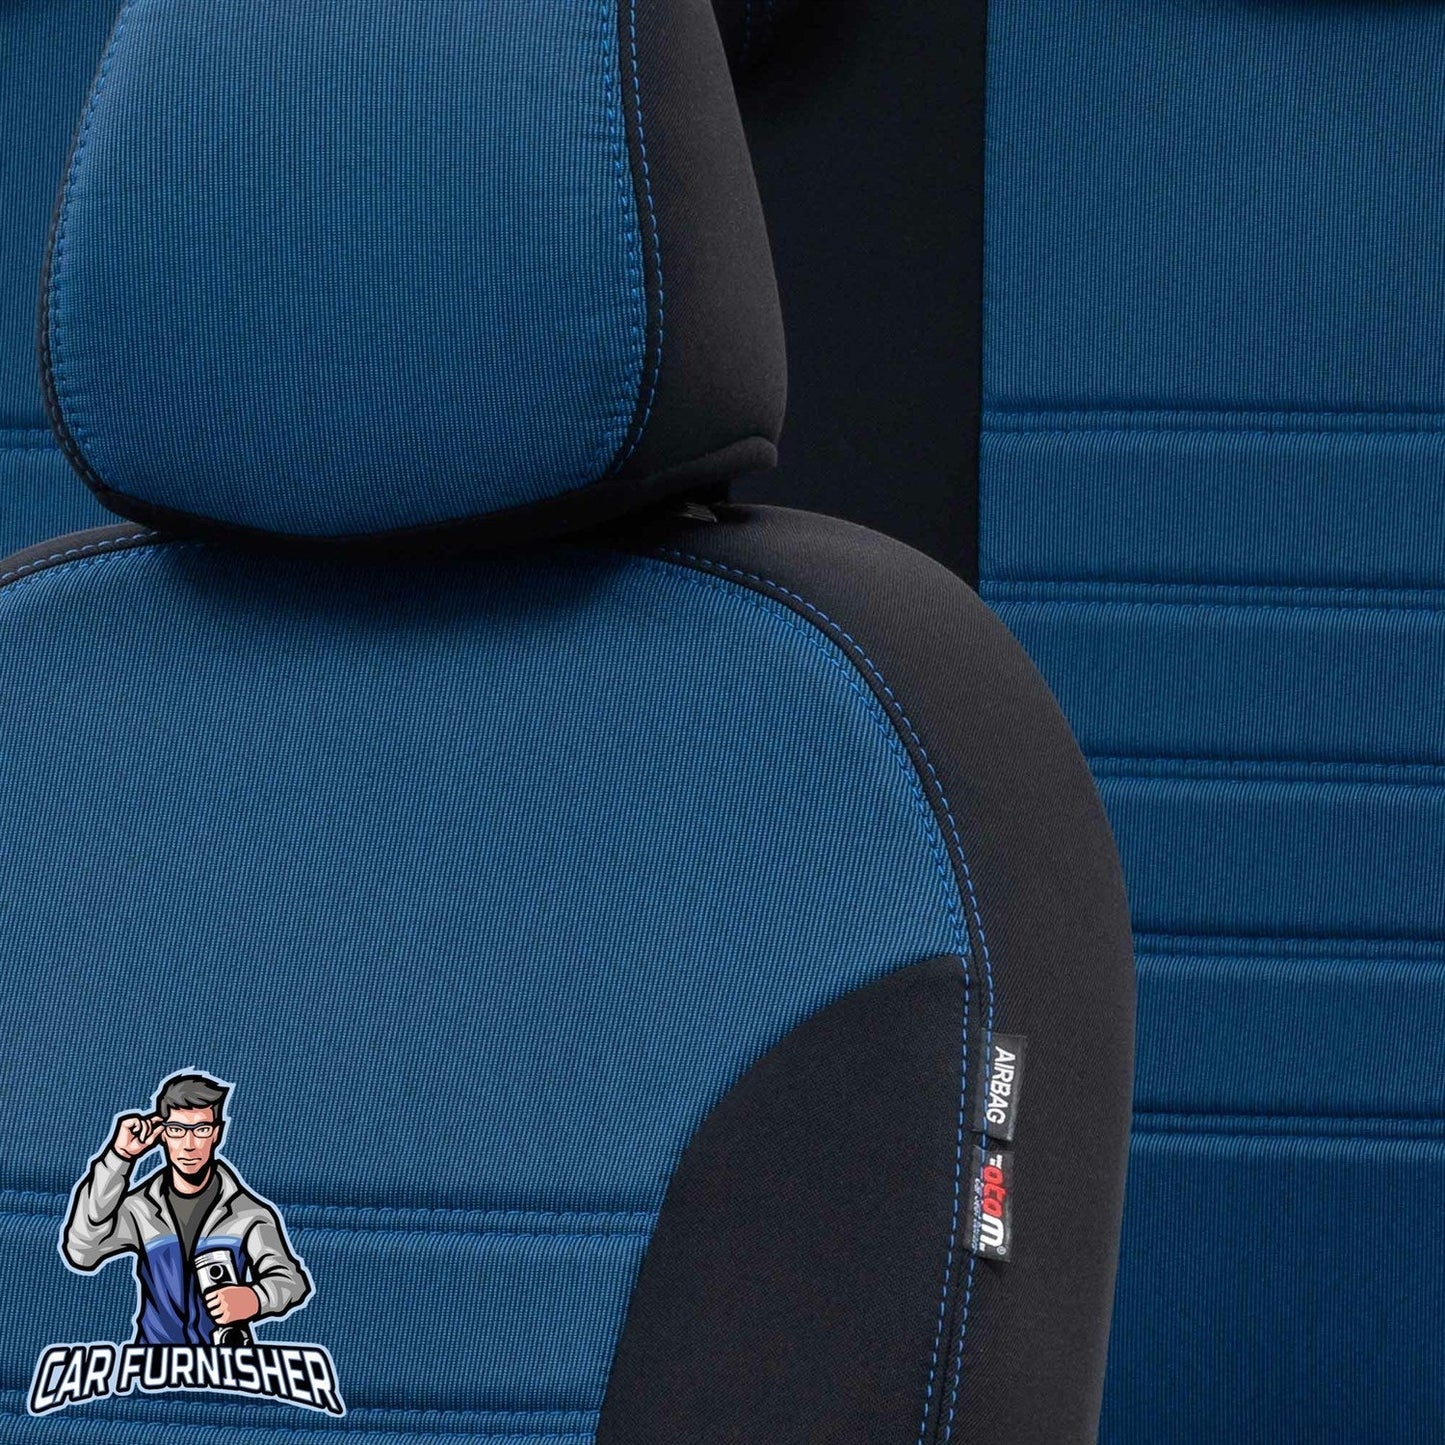 Skoda Kamiq Seat Covers Original Jacquard Design Blue Jacquard Fabric